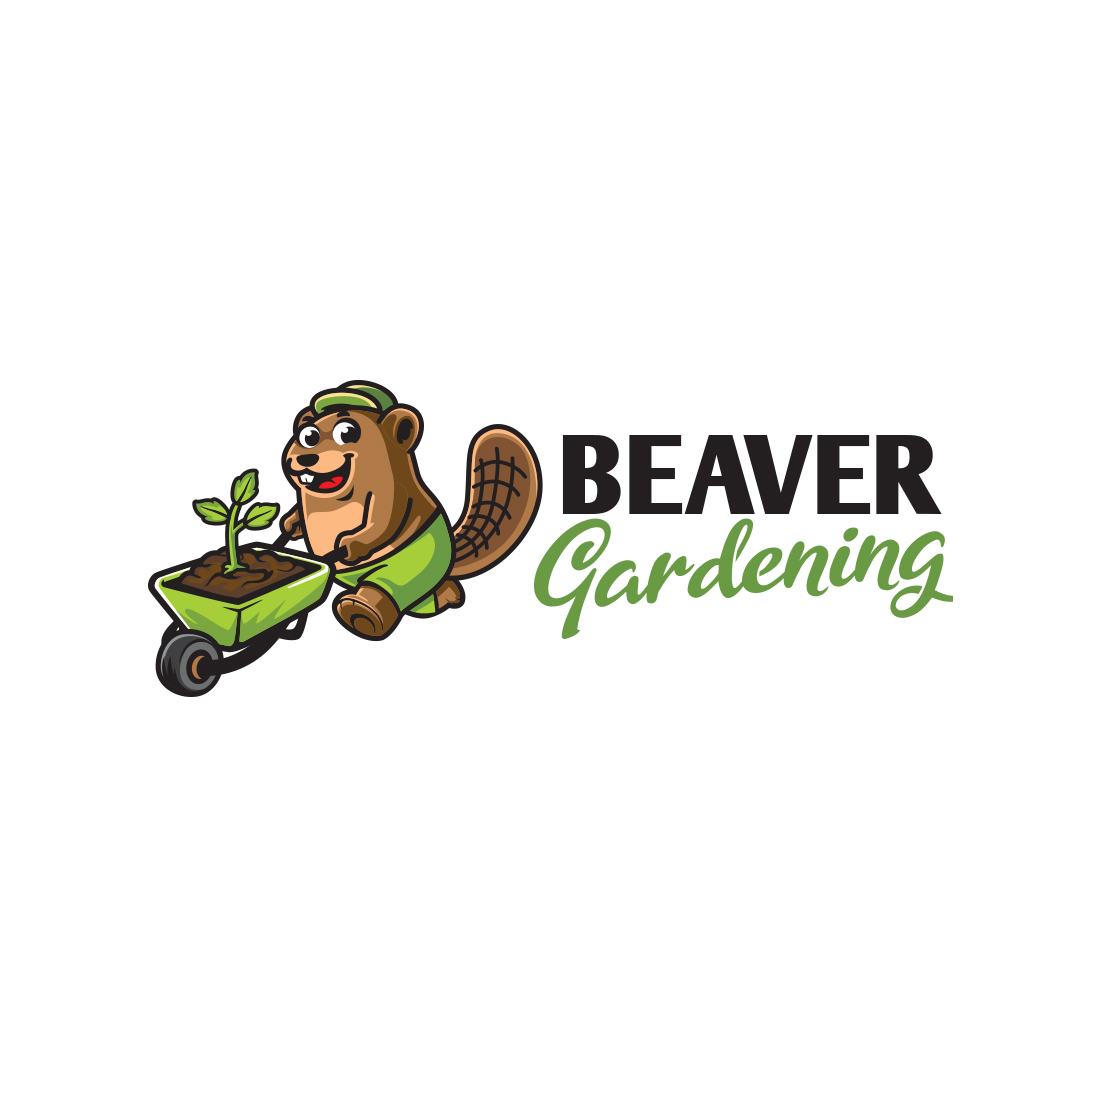 Beaver Gardening Cartoon Mascot Logo cover image.